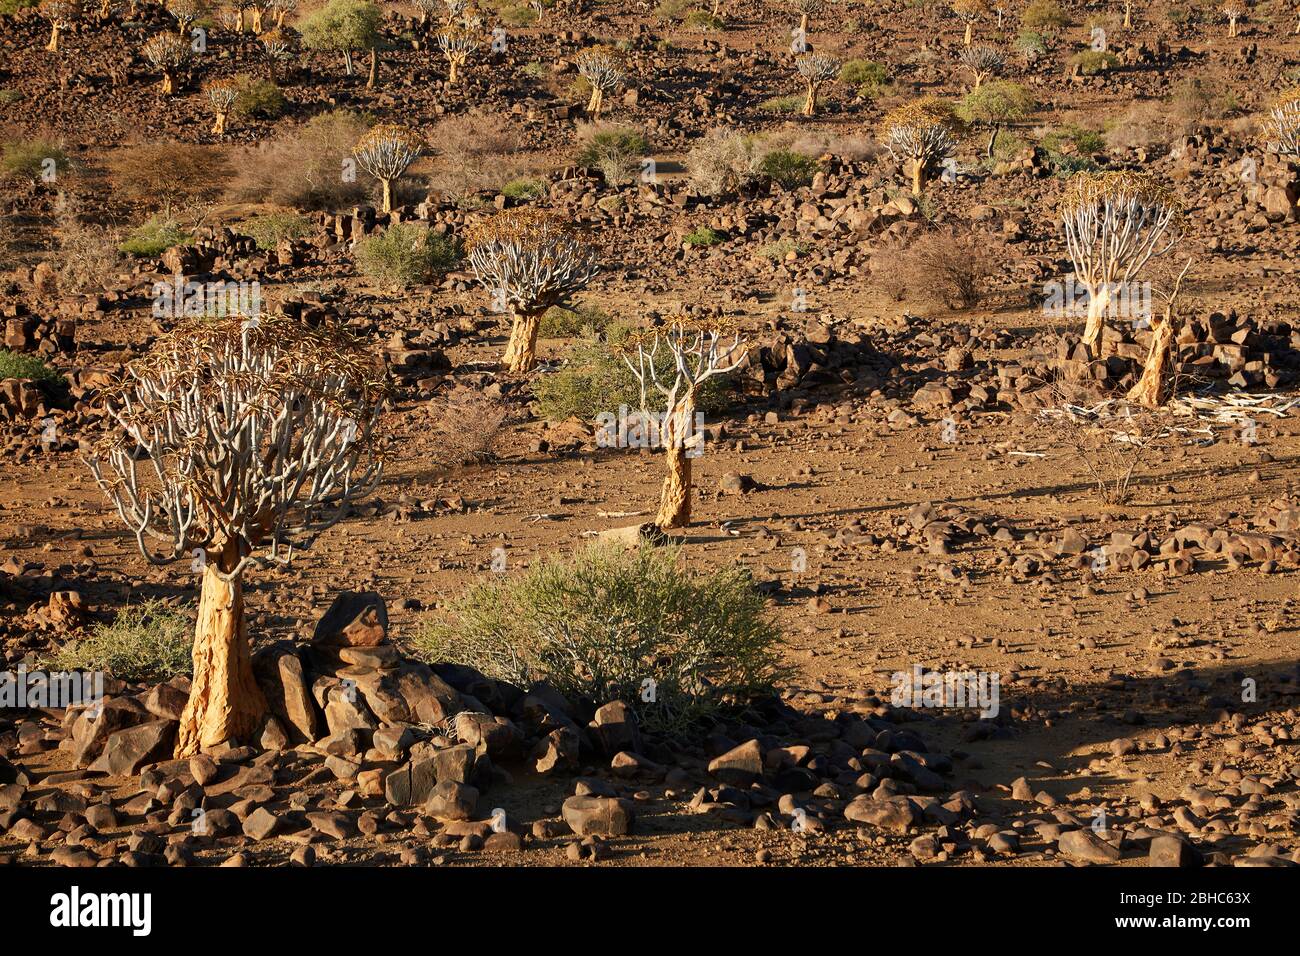 Kocurboom o árboles de quiver (Aloe dichotoma), Mesosaurus Fossil Camp, cerca de Keetmanshoop, Namibia, África Foto de stock